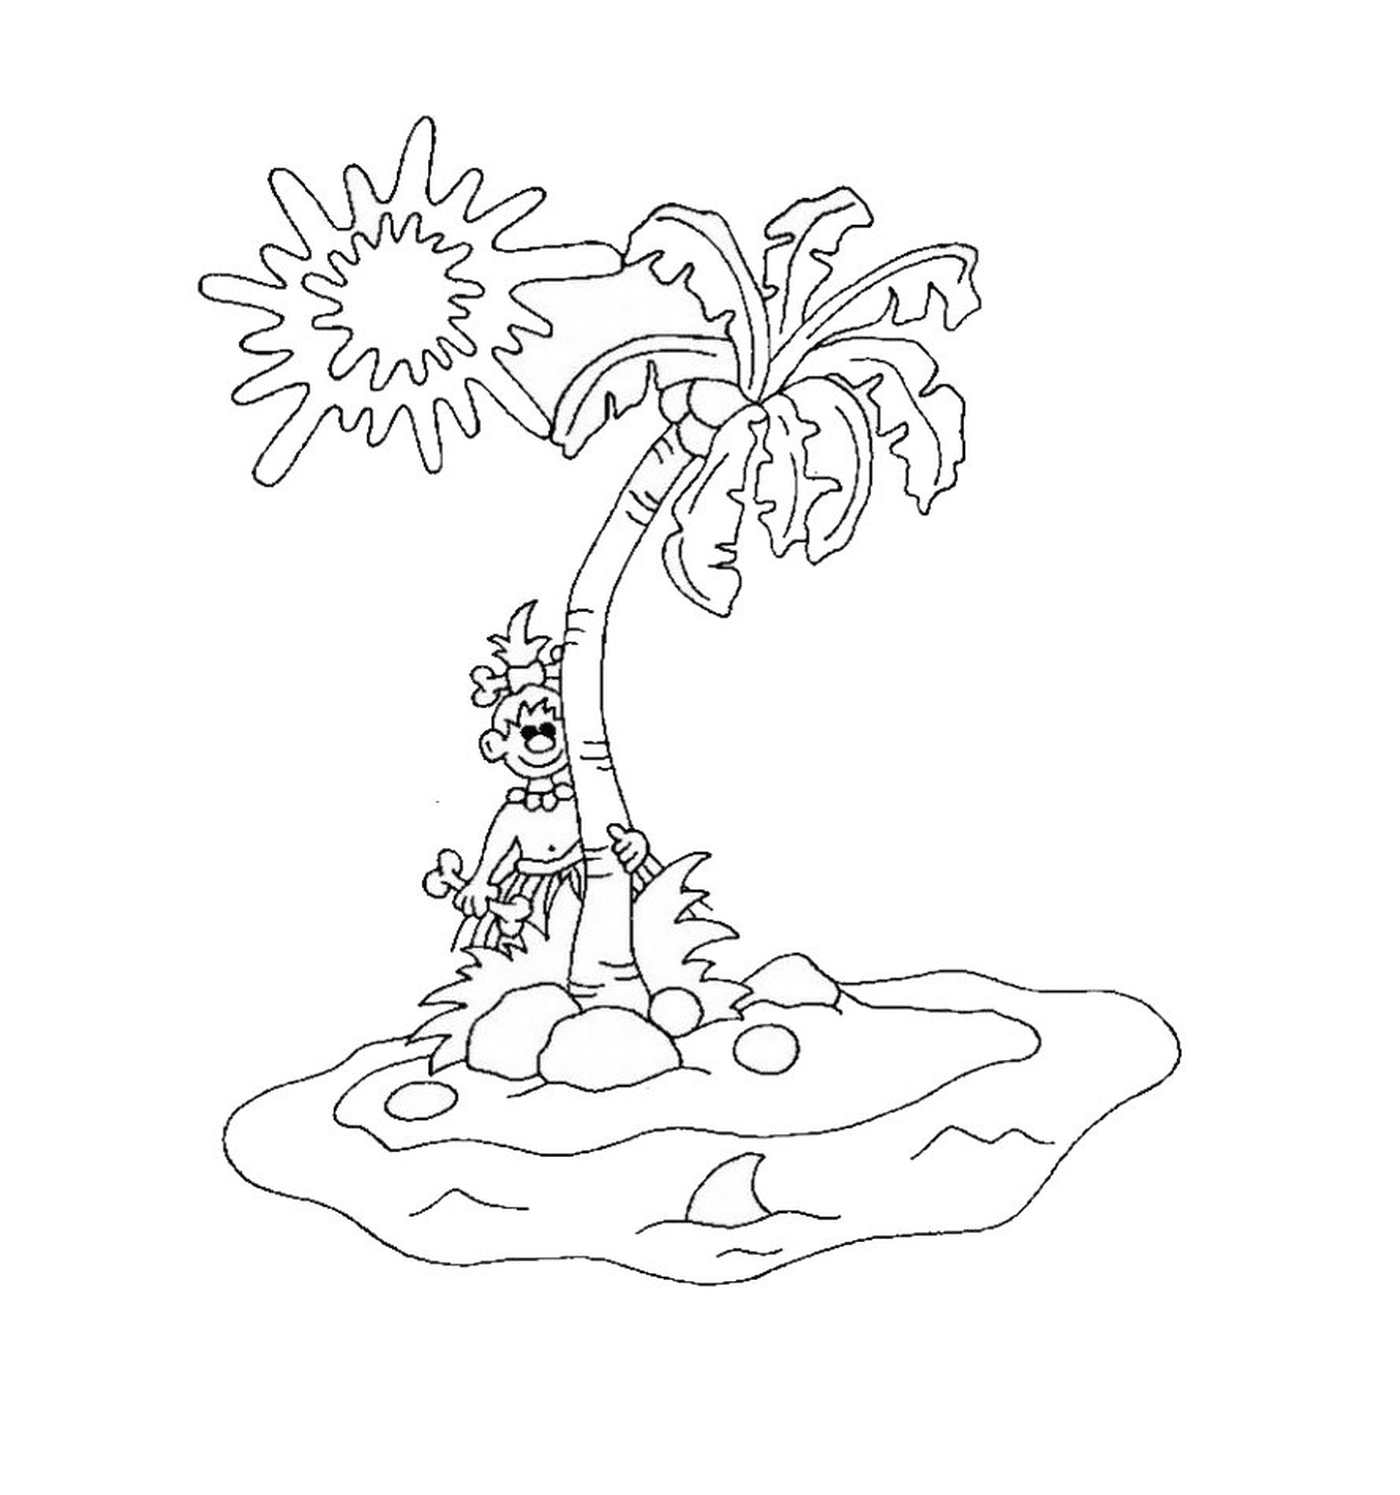  Palm tree on a deserted island 